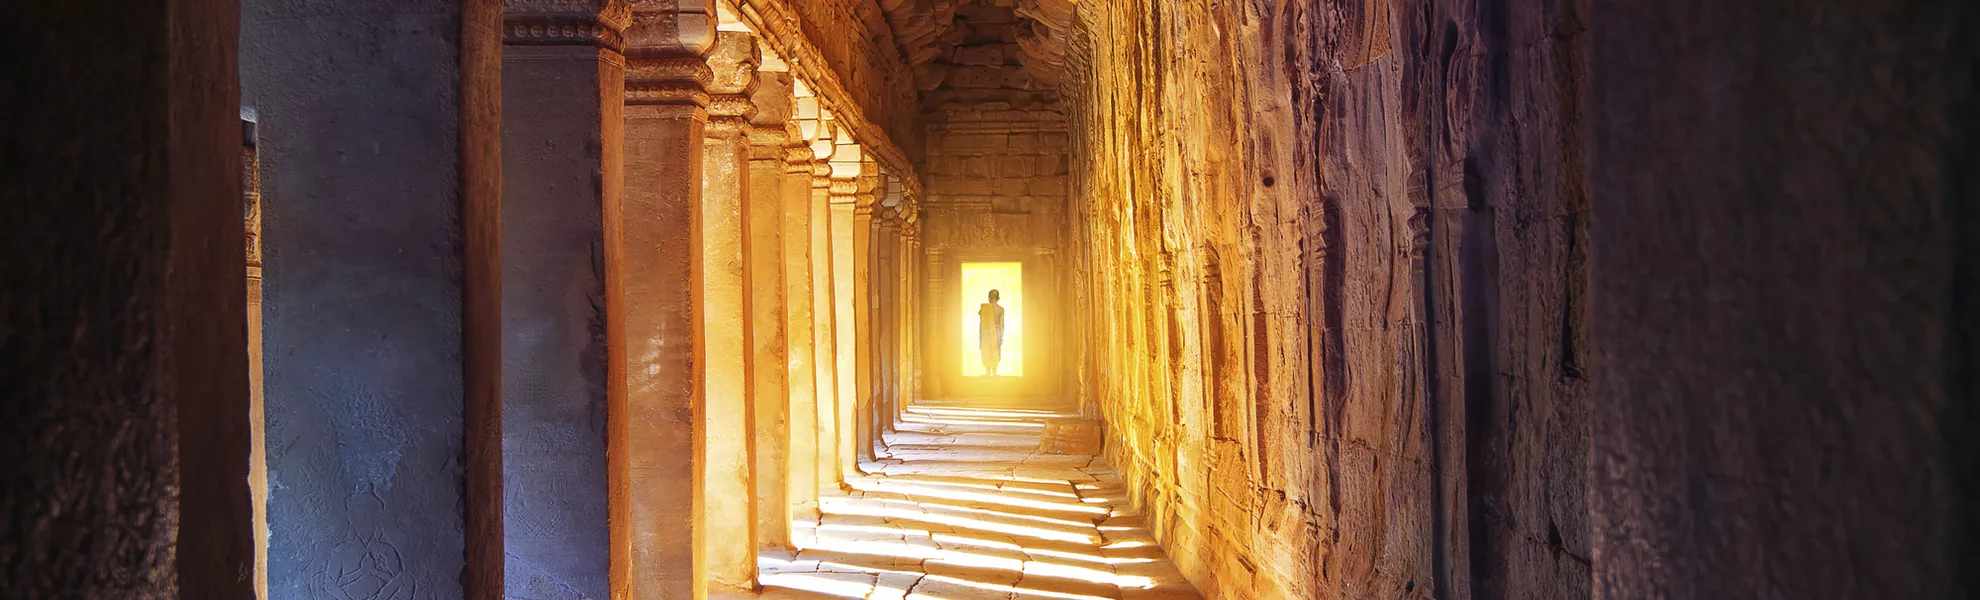 Angkor Wat, Siem Reap - © tawatchai1990 - stock.adobe.com